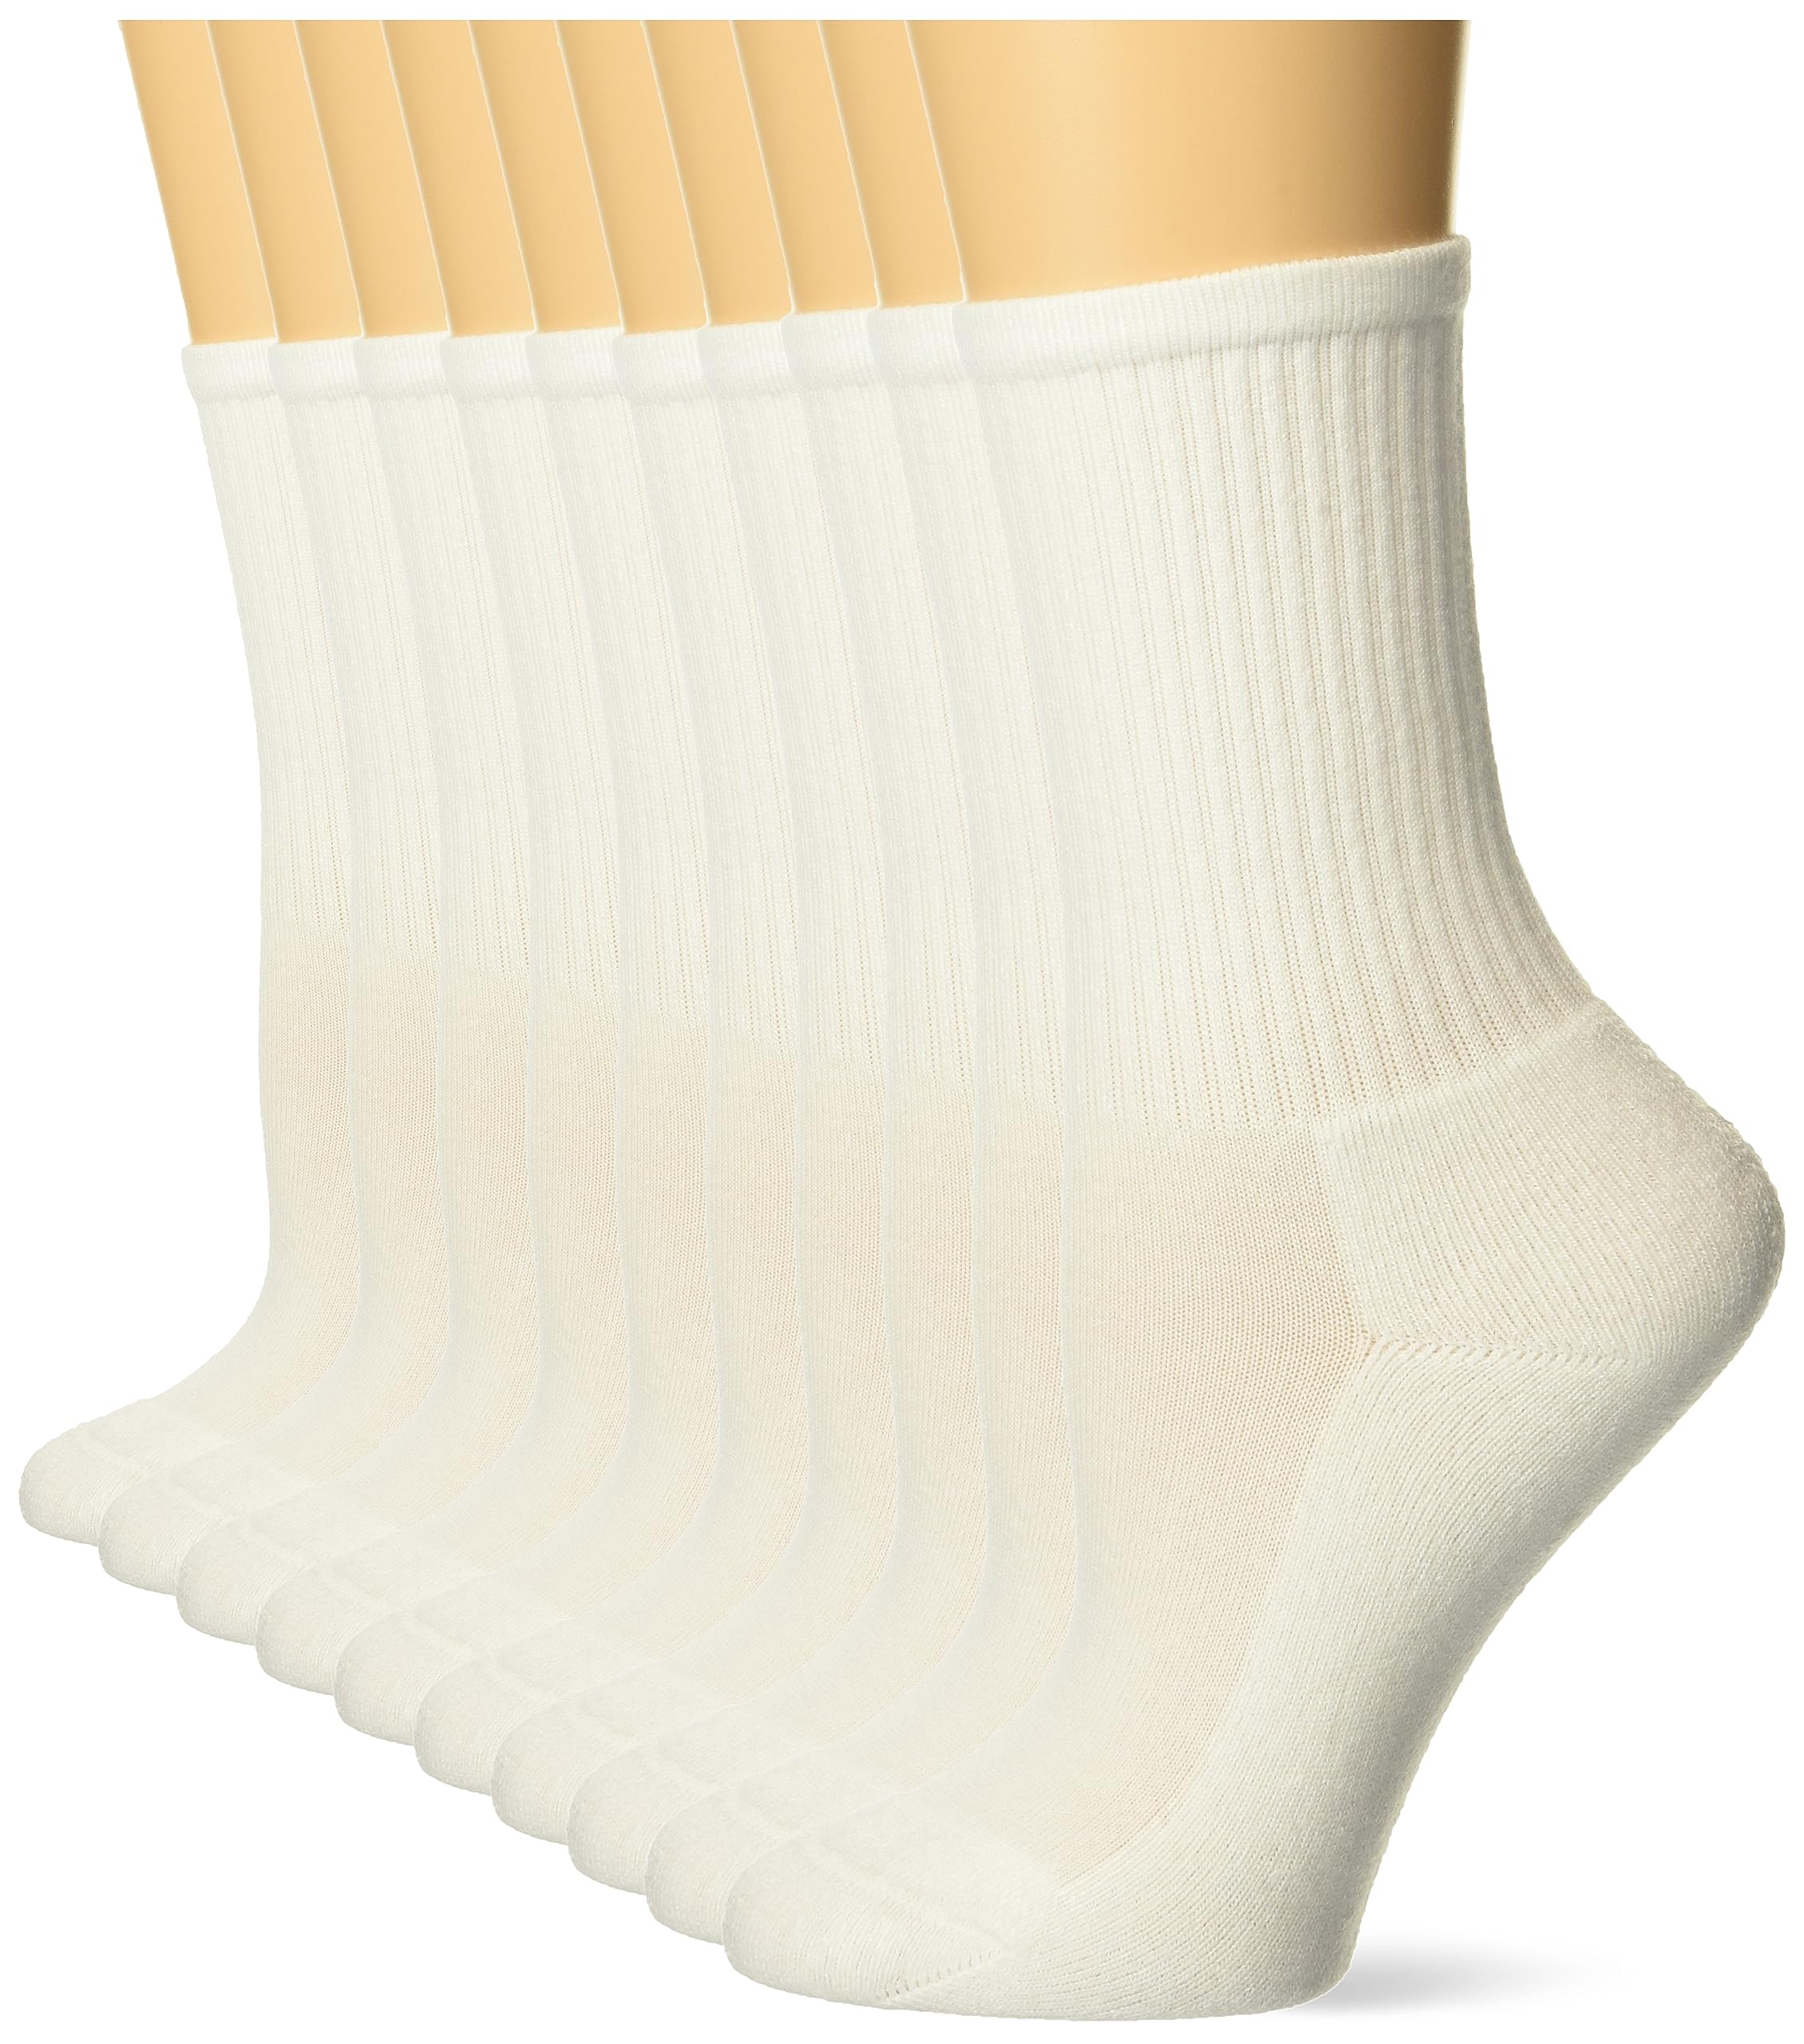 Hanes girls White Uniform Crew Socks, 10-pairs Pack, Cushioned Sports Socks, Classic Mid-calf Crew Socks for Girls